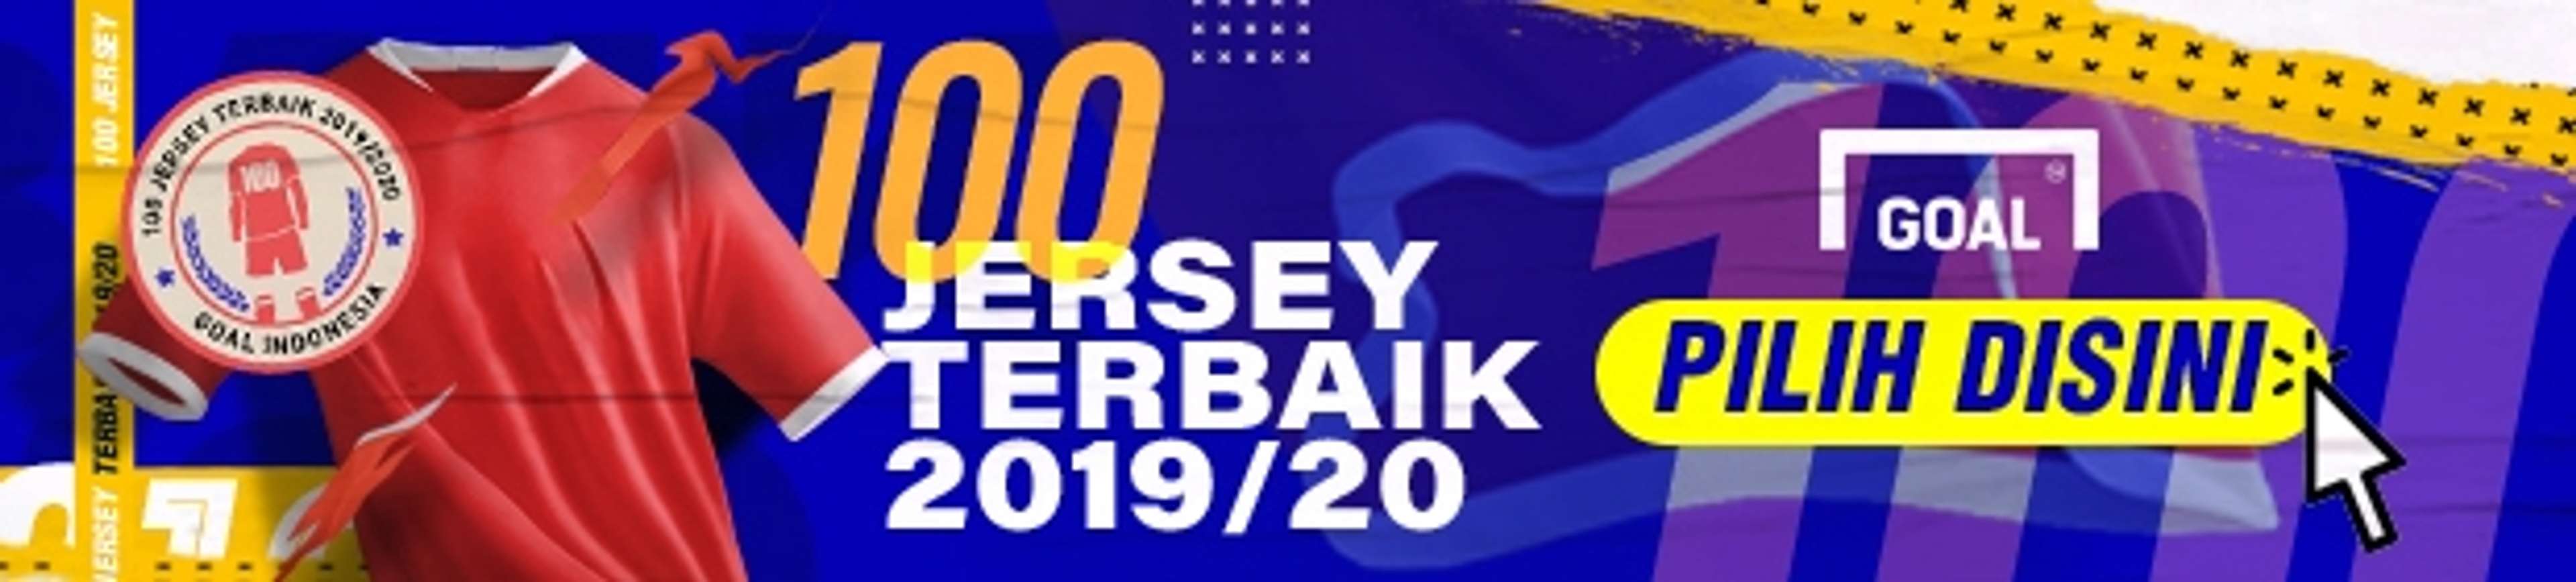 100 Jersey Terbaik 2019 2020 Banner